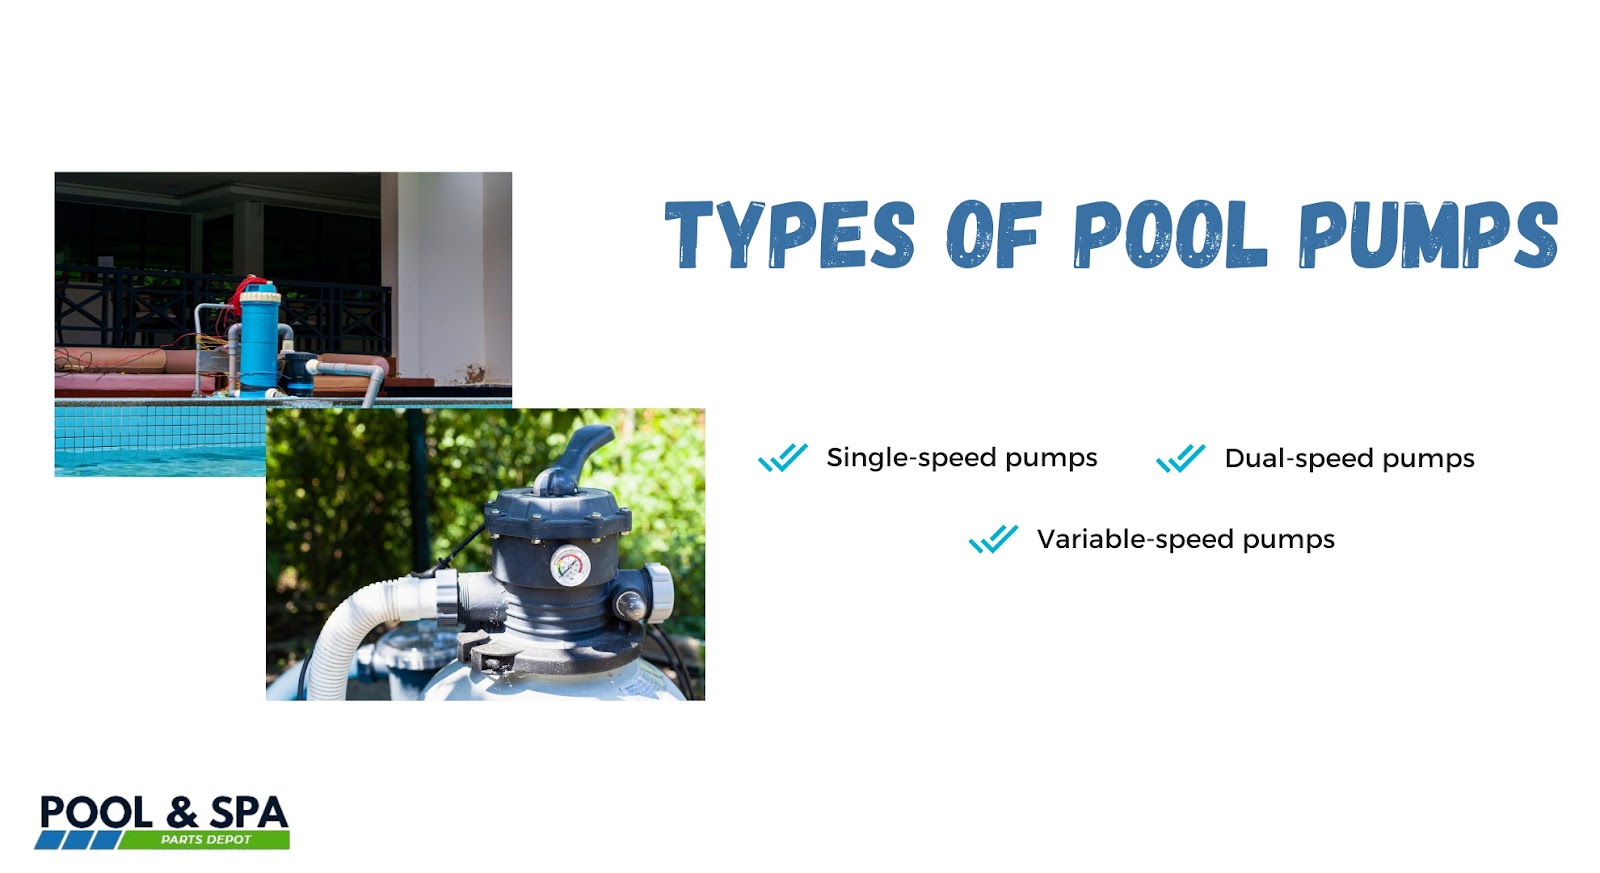 Types of Pool Pumps